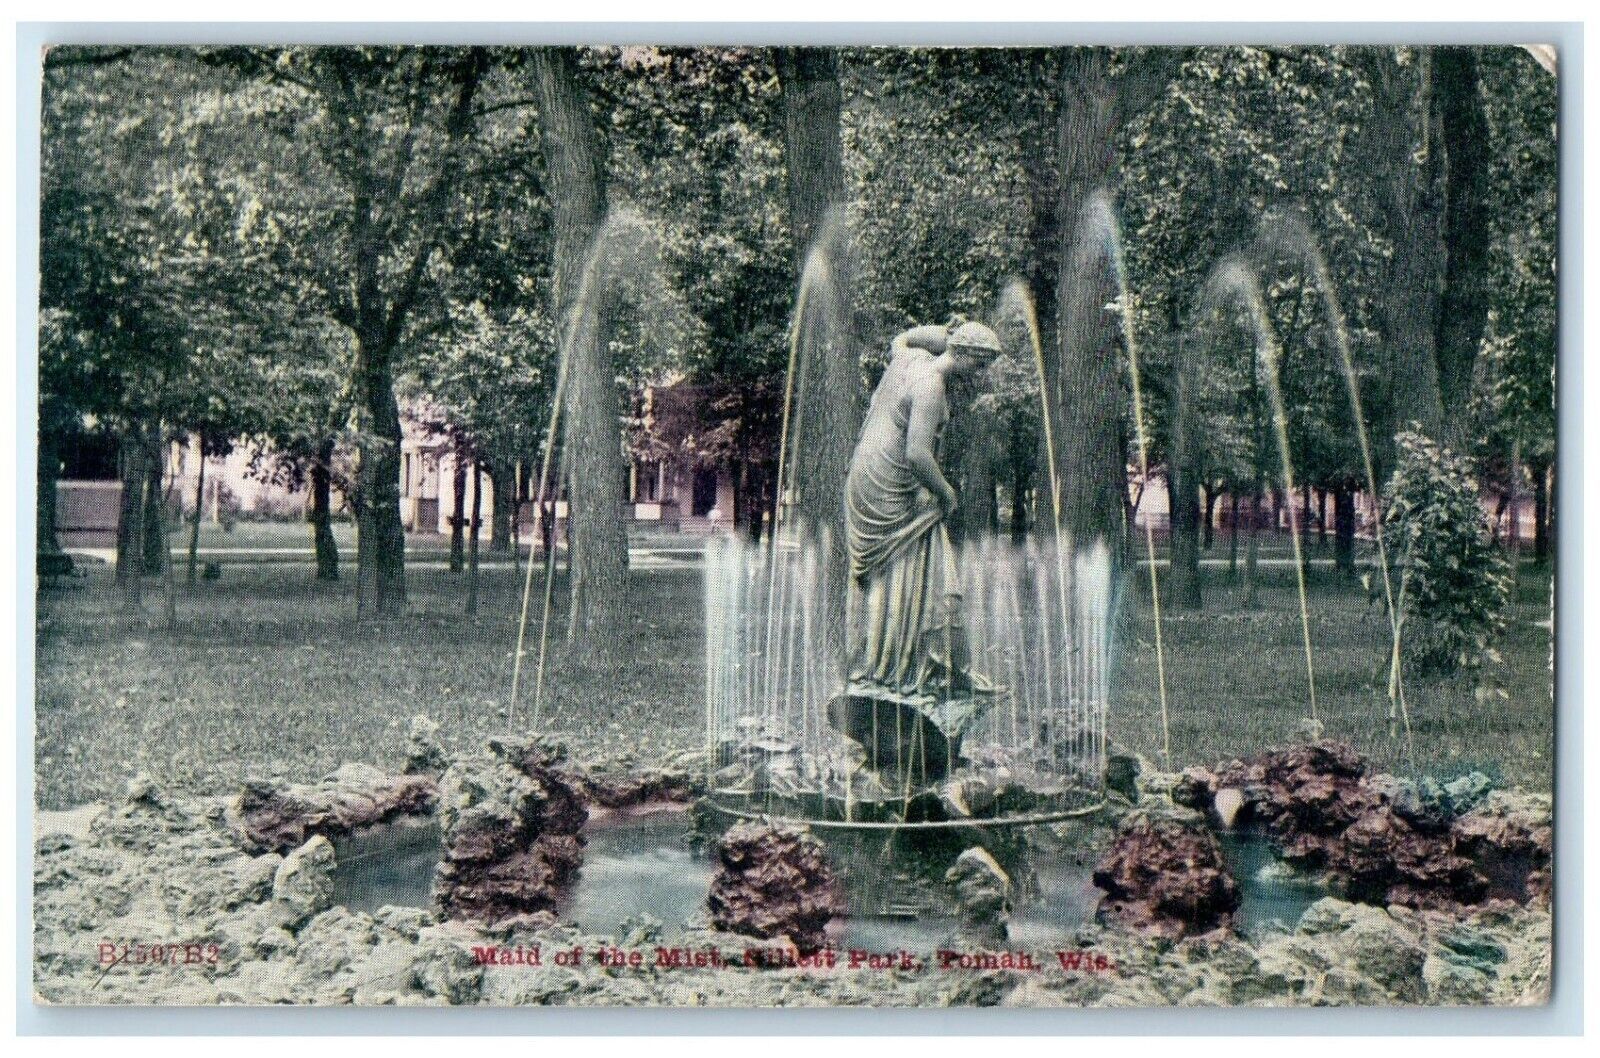 1910 Maid Mist Gillett Park Fountain Statue Sculpture Tomah Wisconsin Postcard